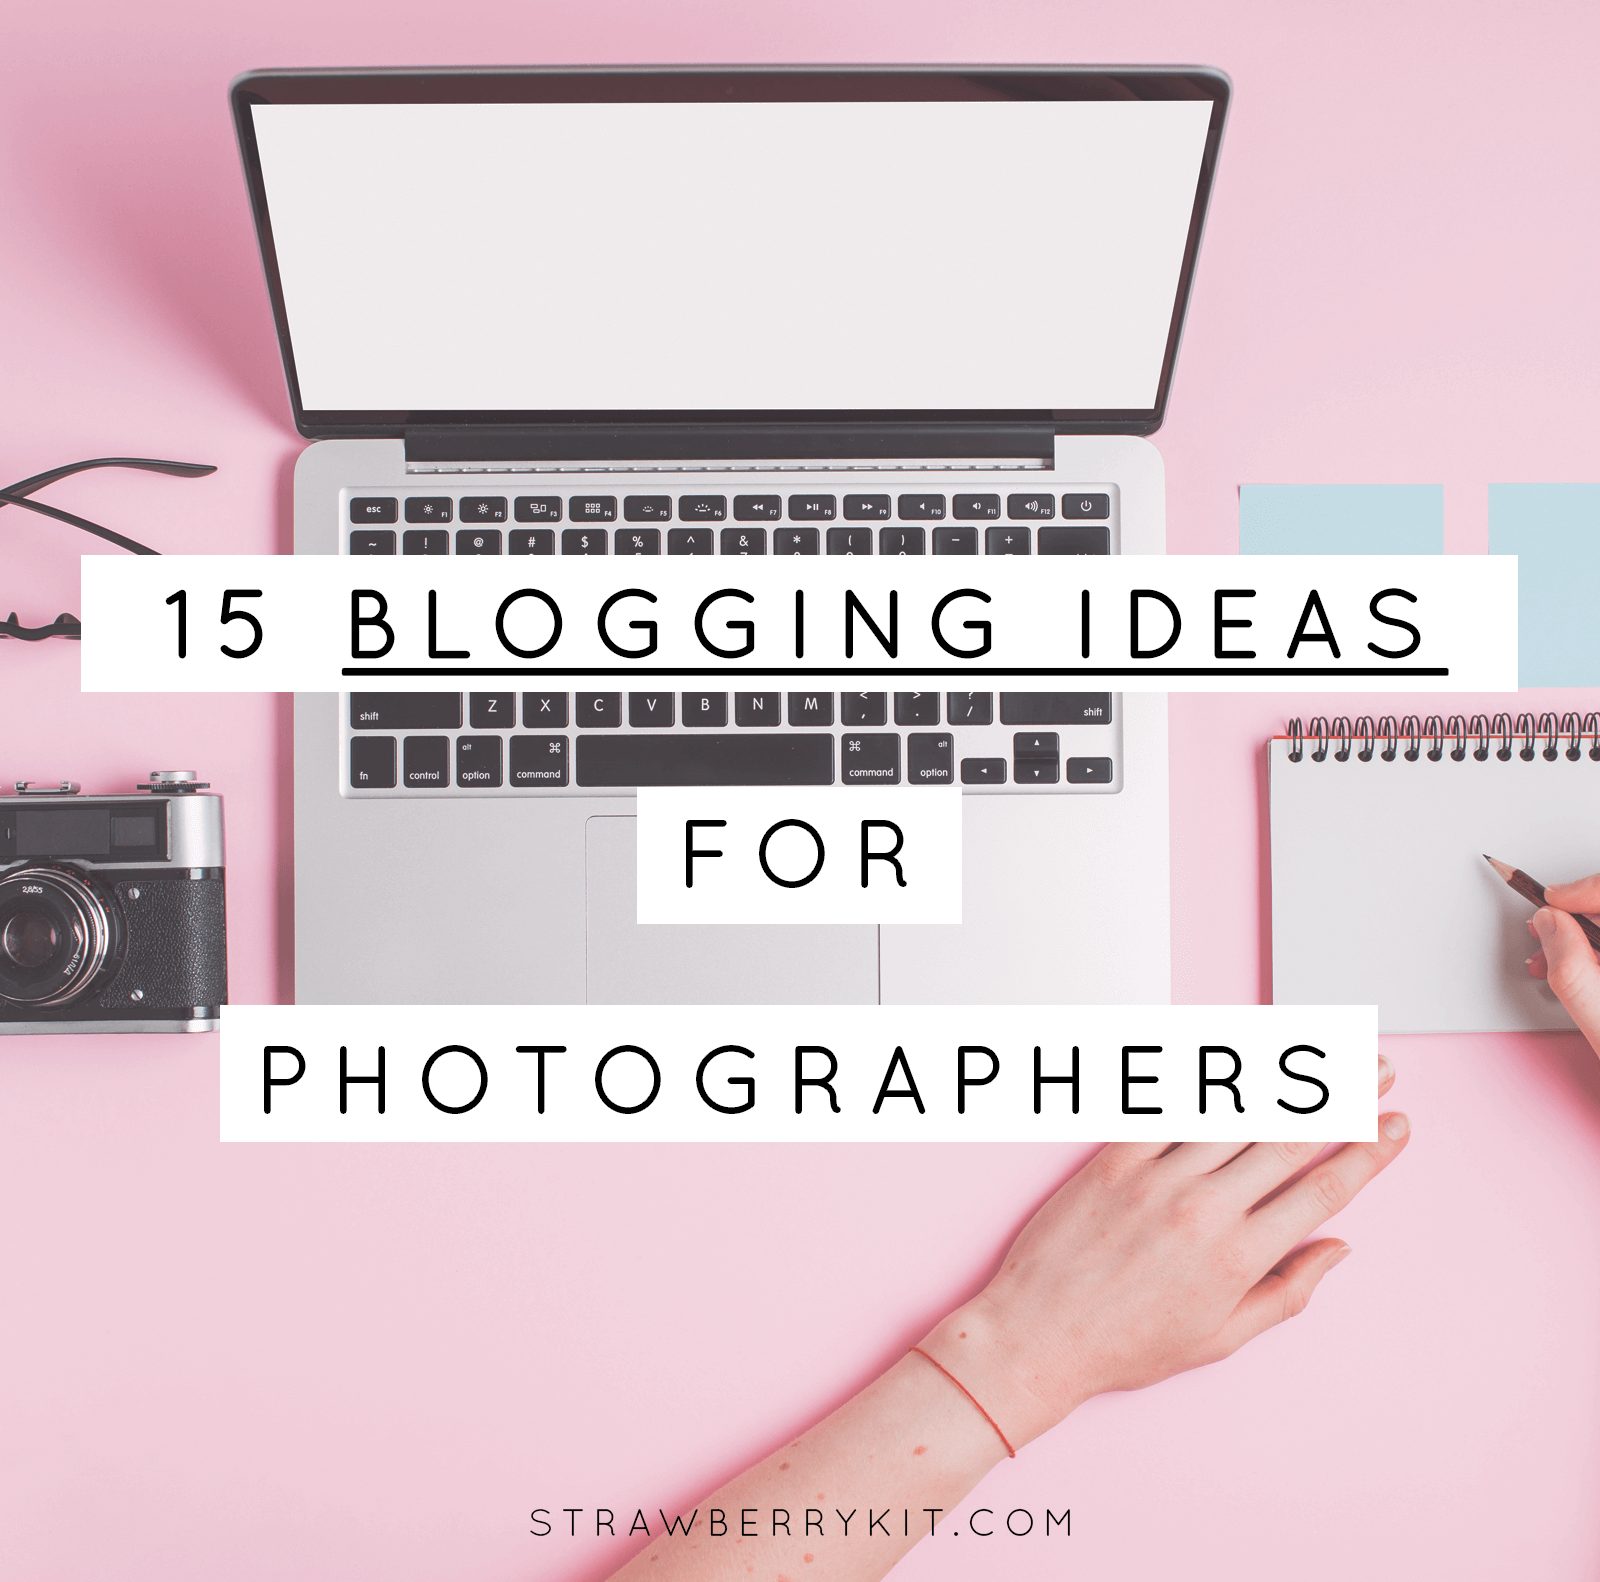 Blogging ideas for Photographers